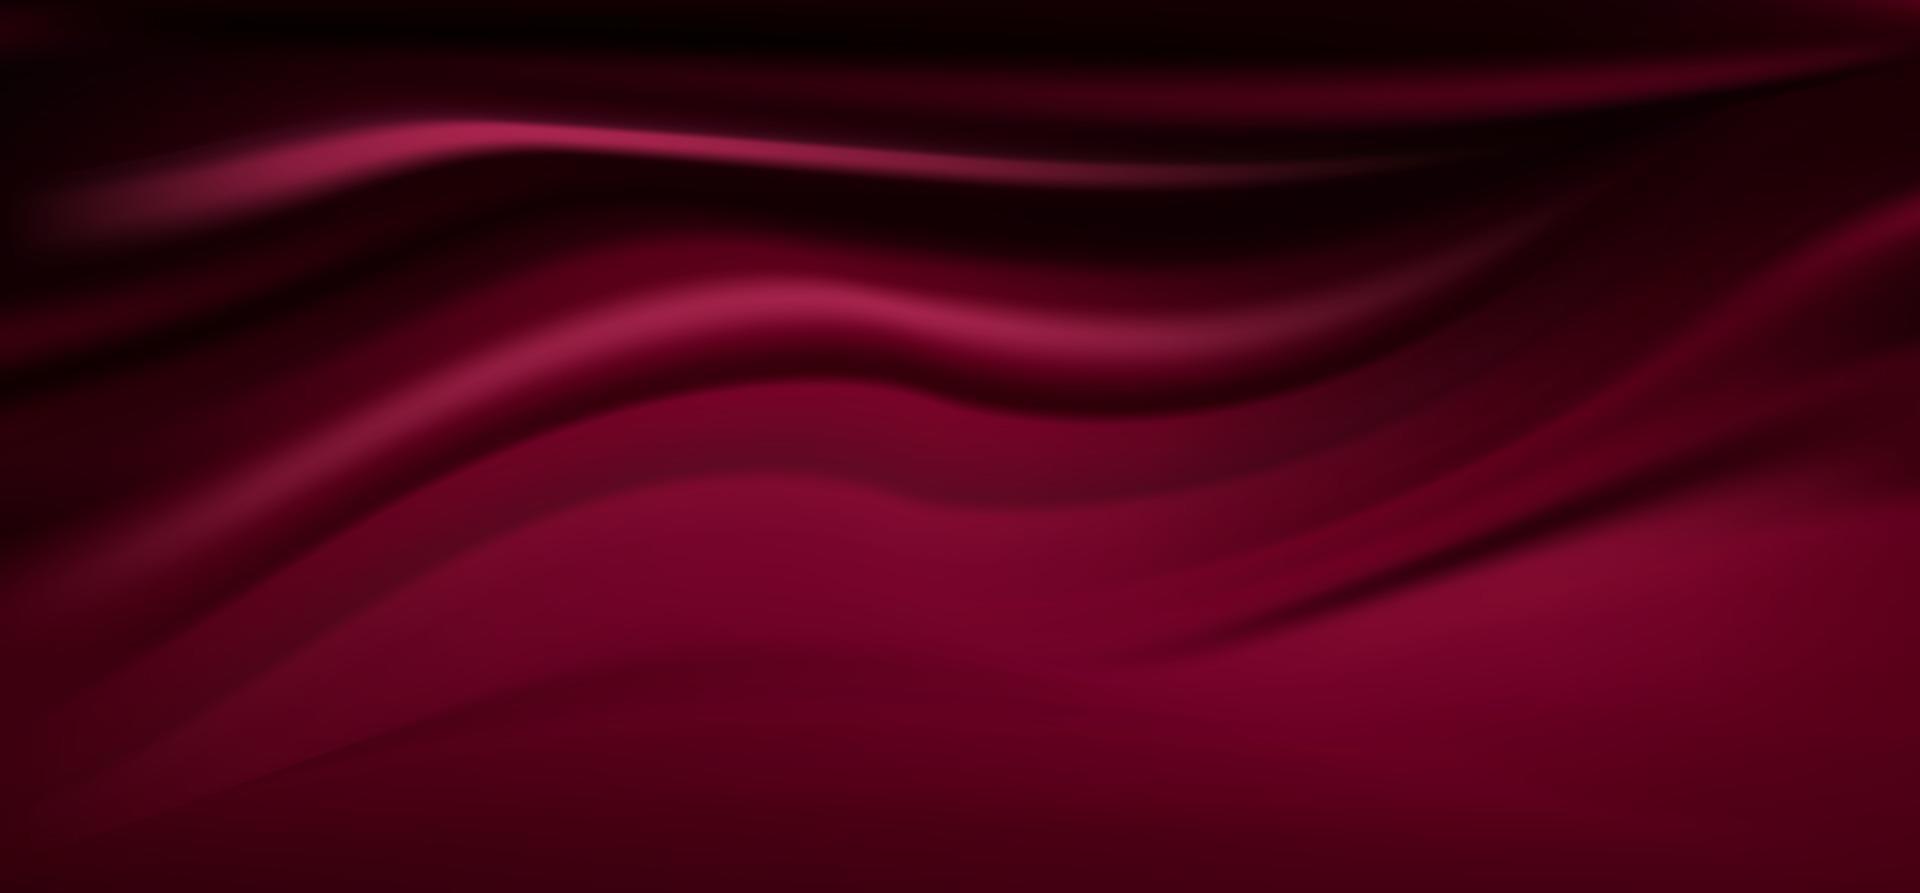 Fondo de tela de satén de seda púrpura. ilustración vectorial. Eps10 vector